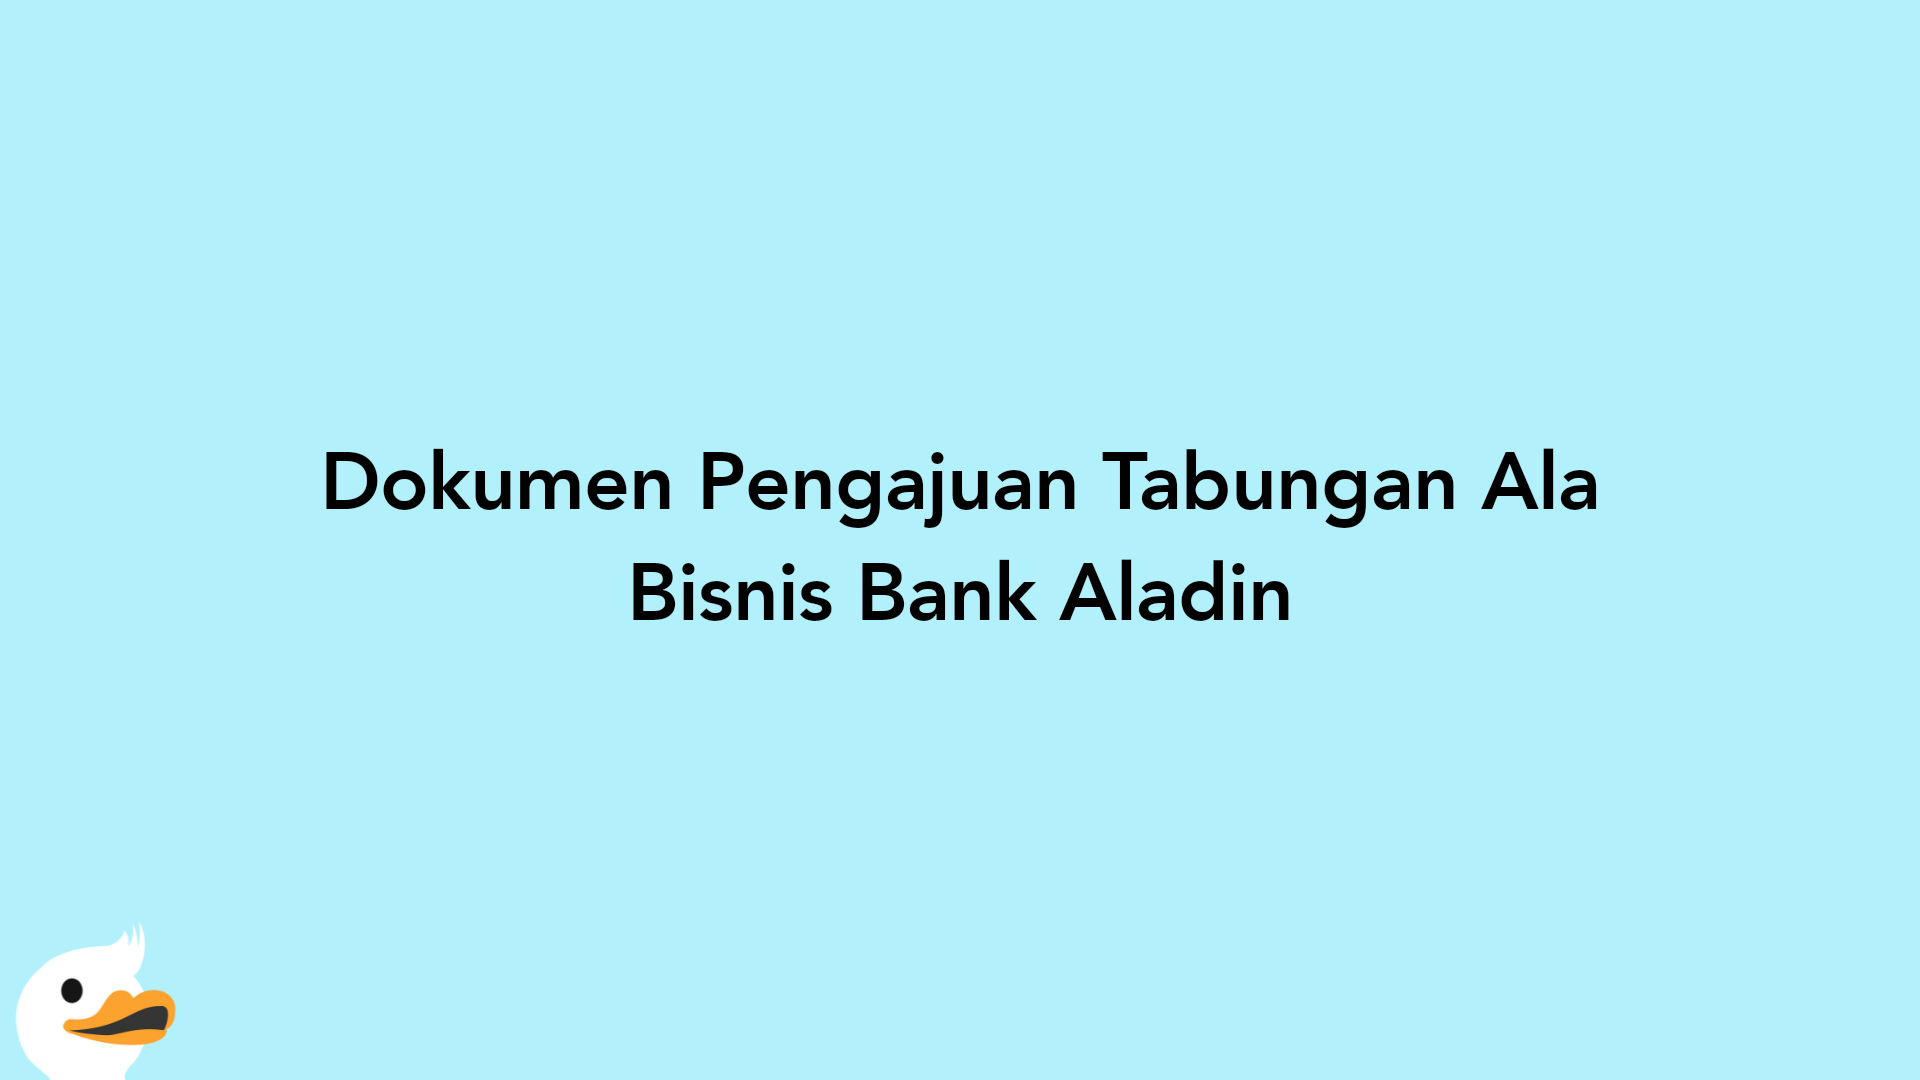 Dokumen Pengajuan Tabungan Ala Bisnis Bank Aladin